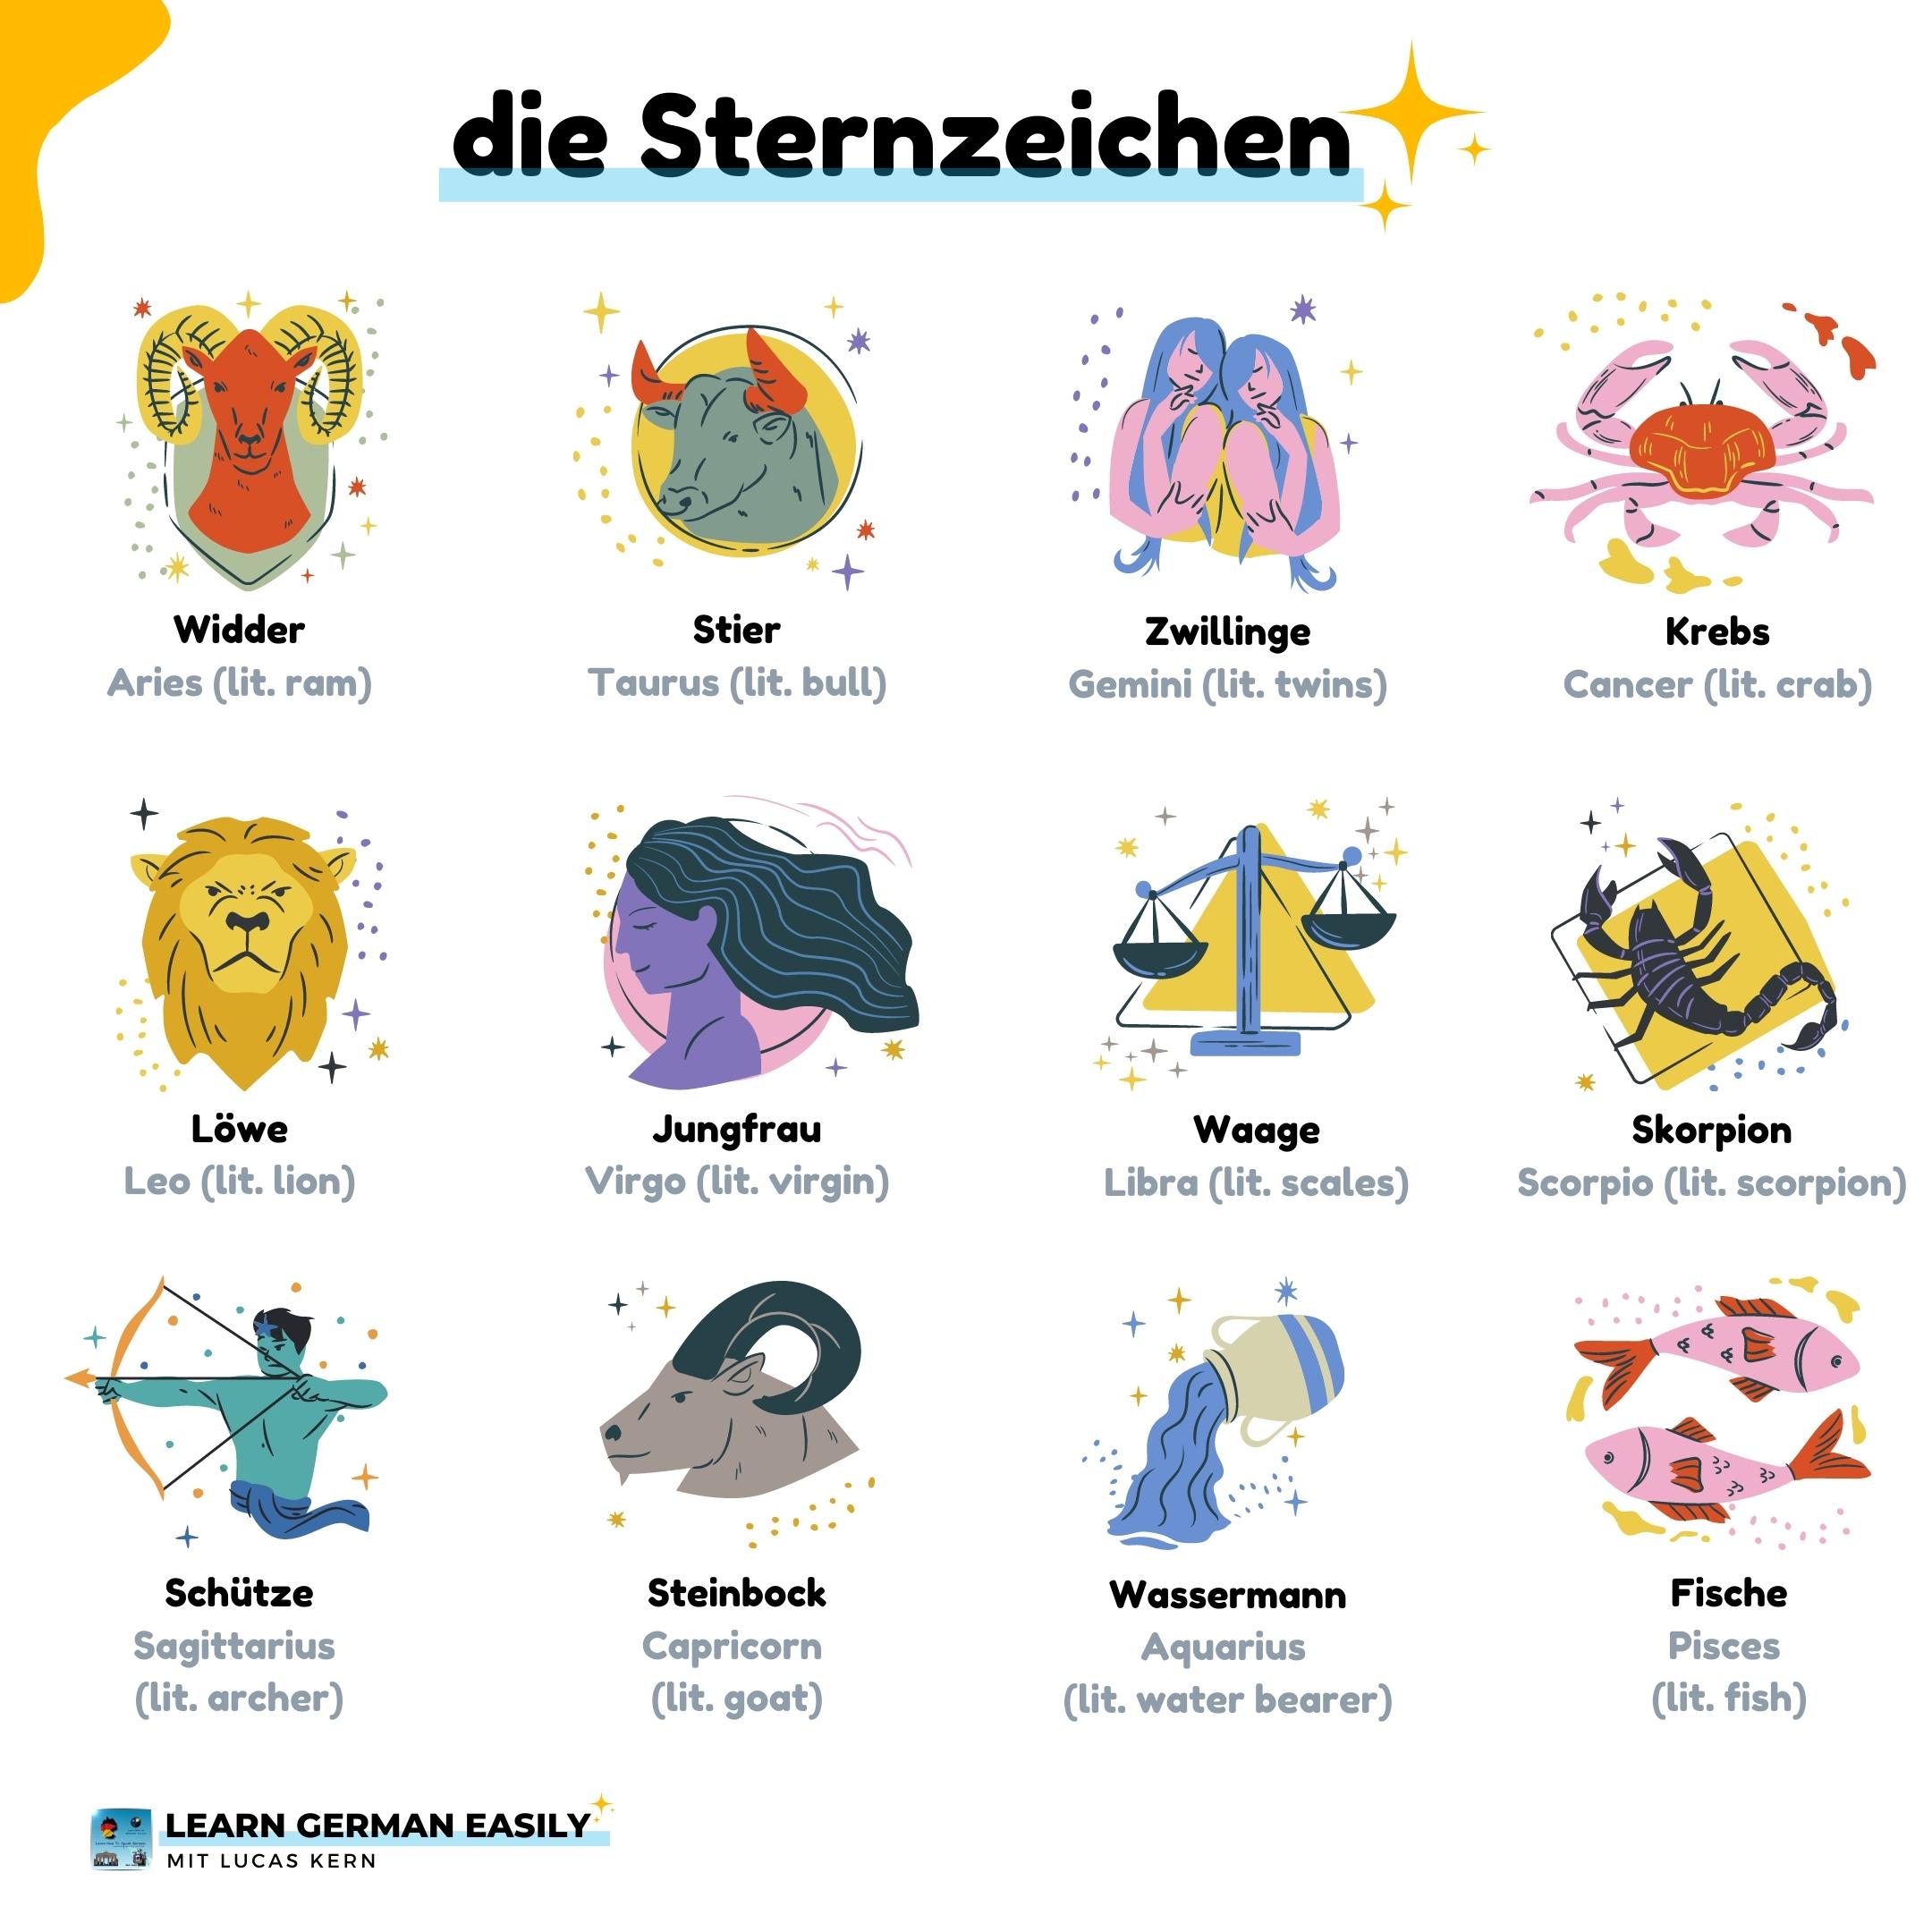 Zodiac Signs in German (Star Signs) | Learn German Easily